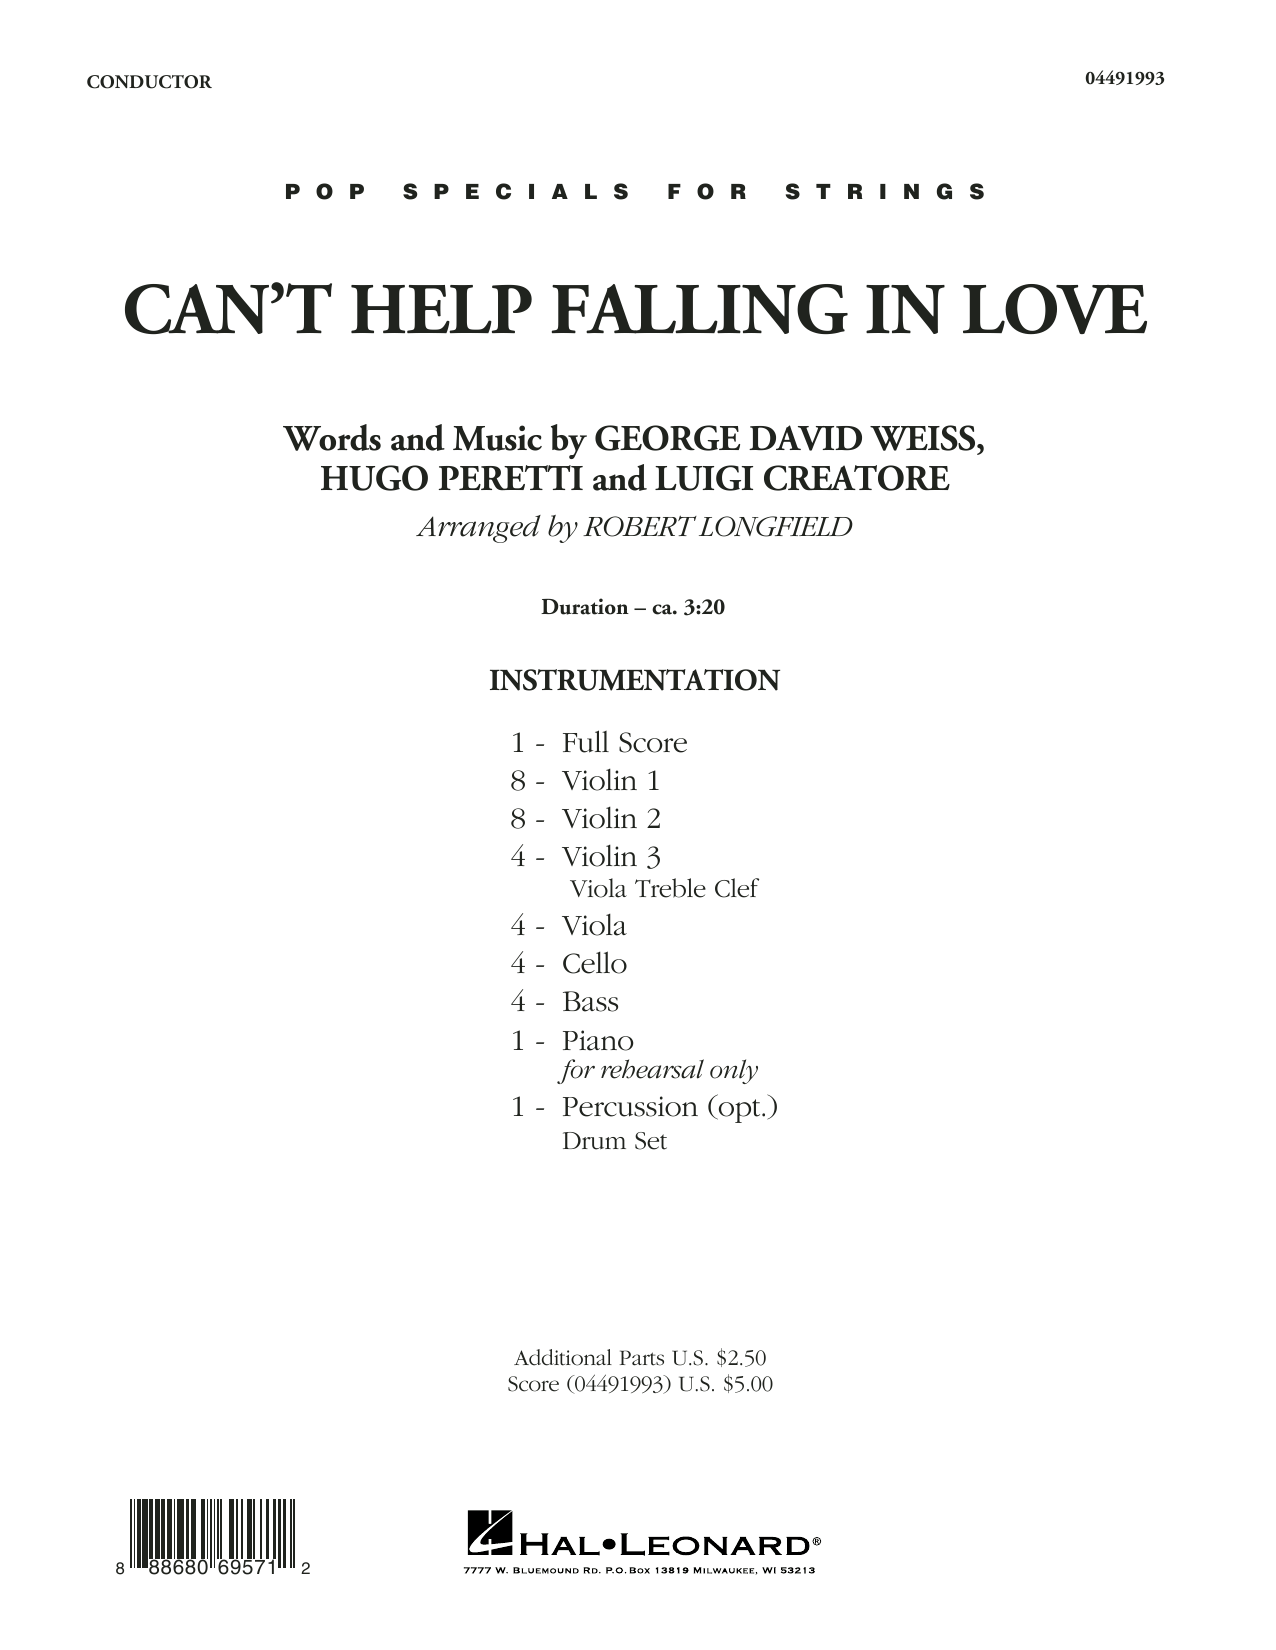 Can't Help Falling in Love - Conductor Score (Full Score) (Orchestra) von Robert Longfield